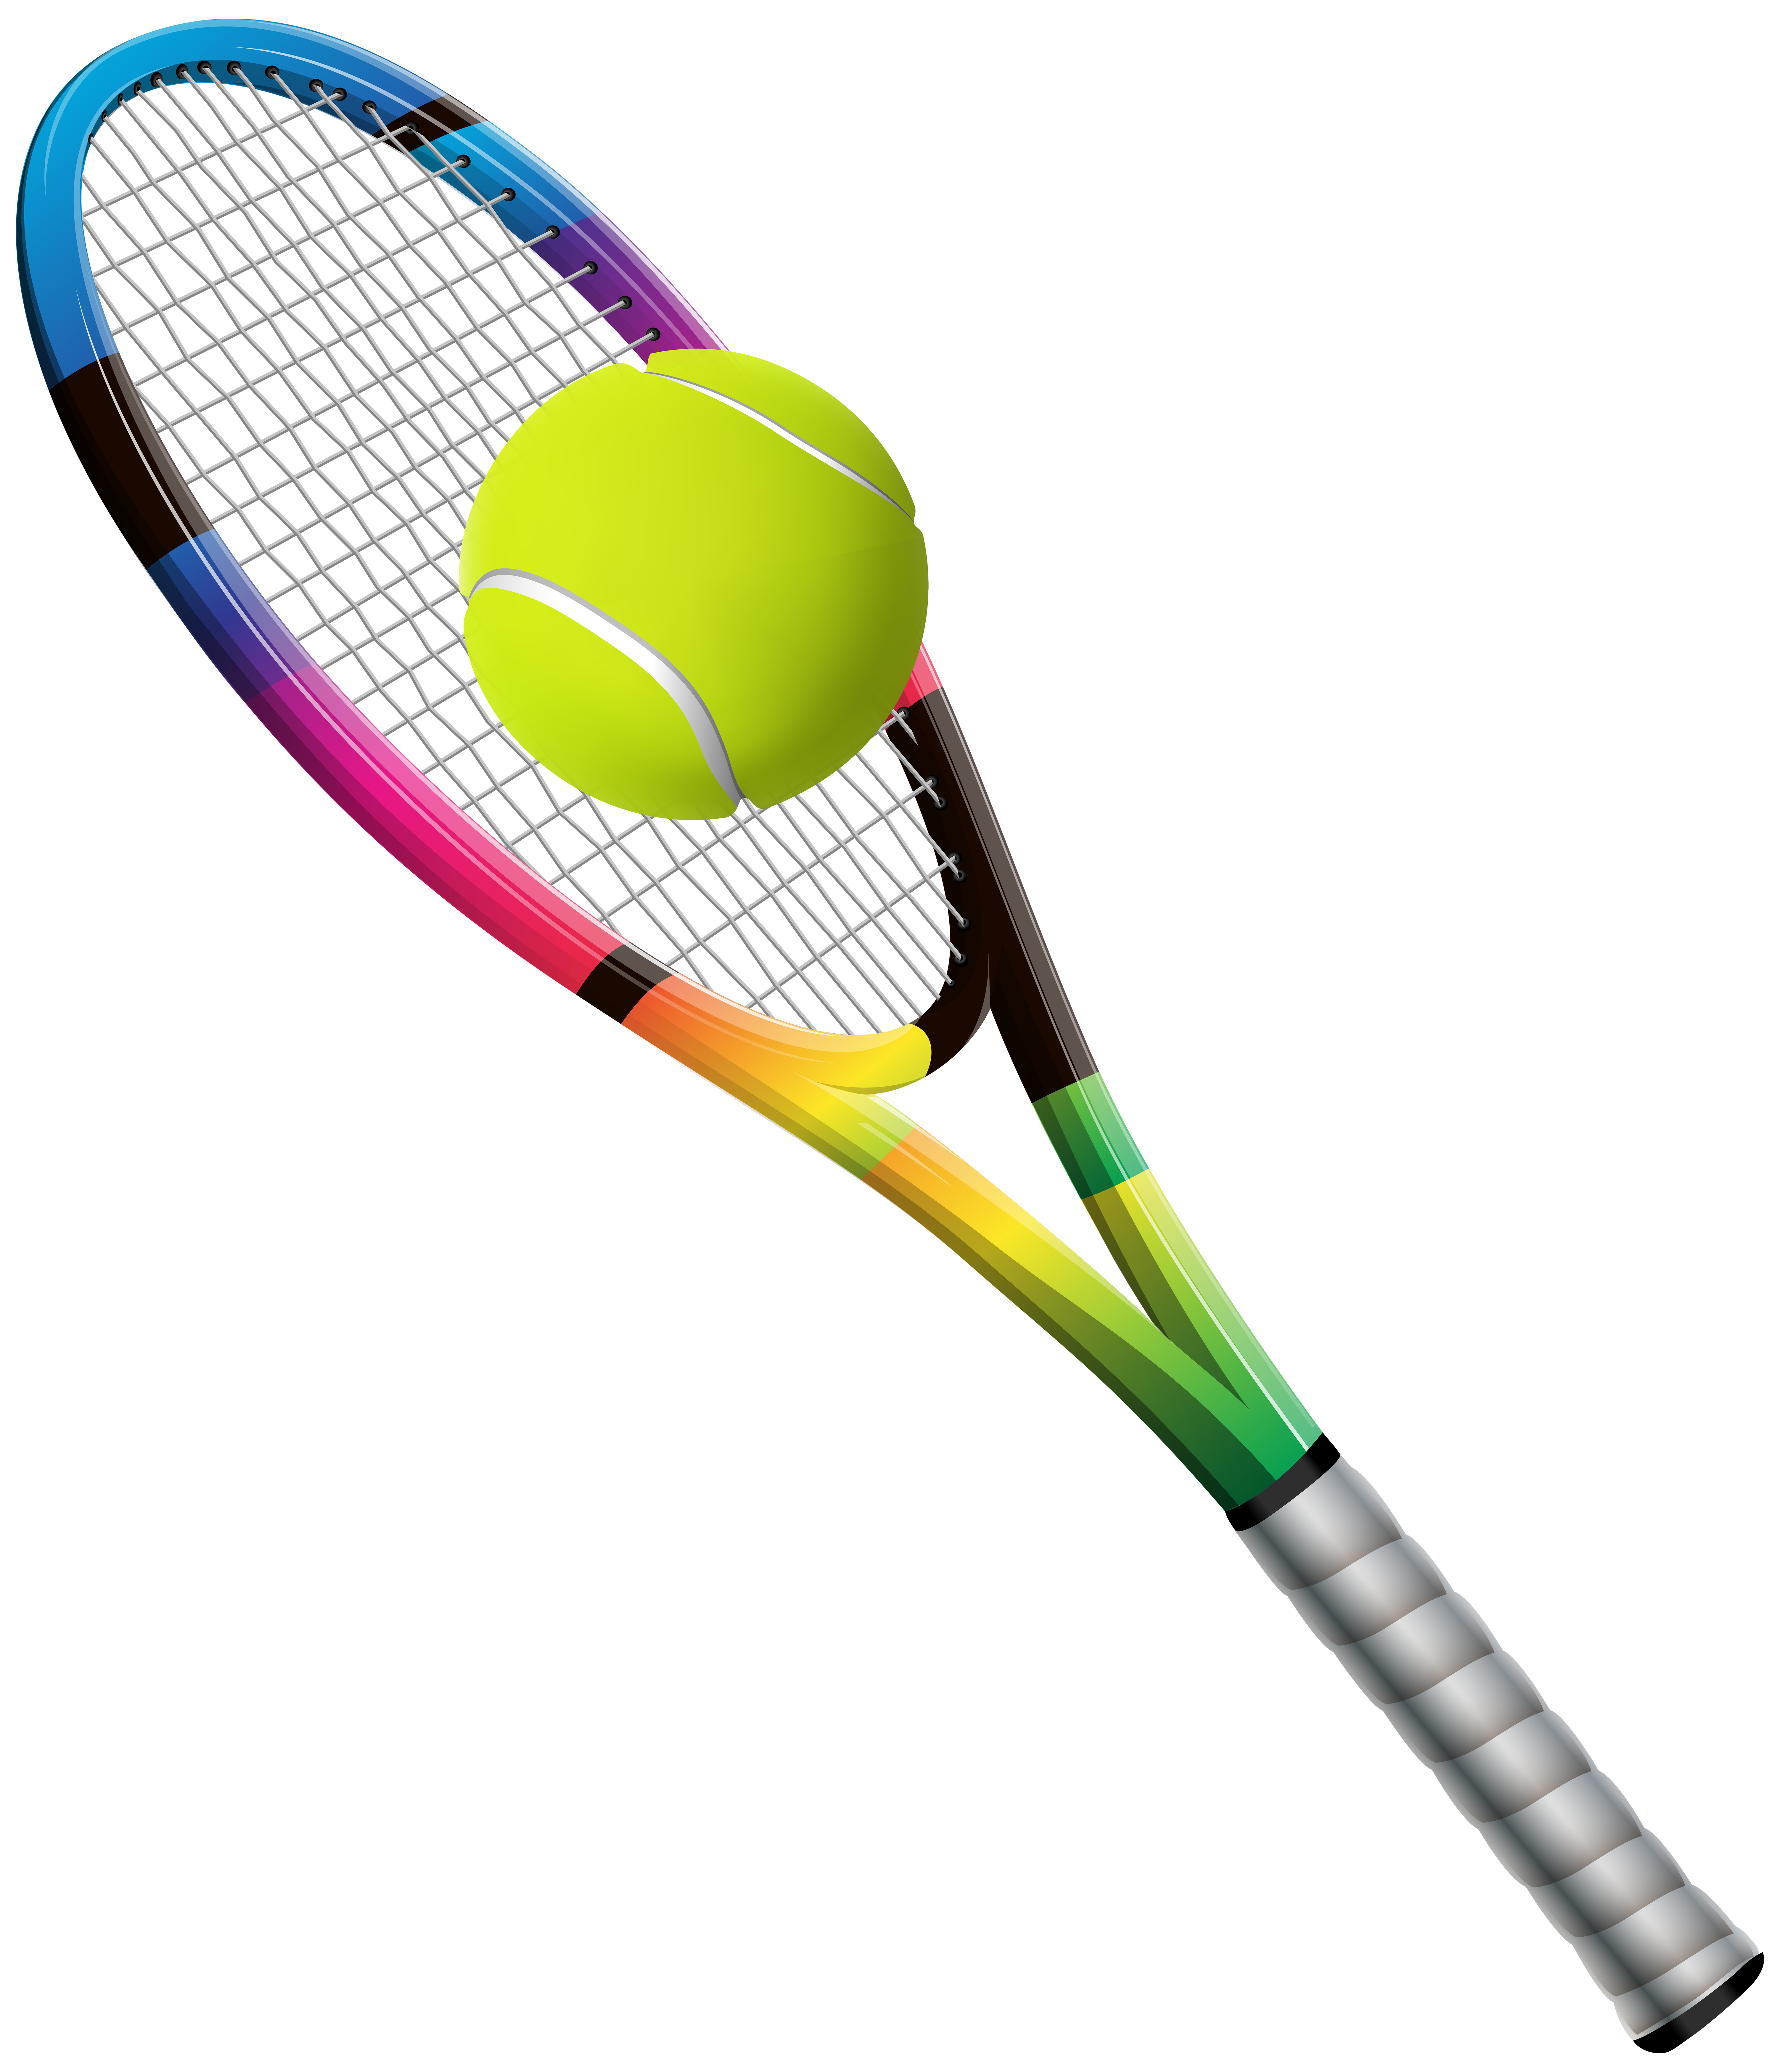 Tennis Racket and Ba